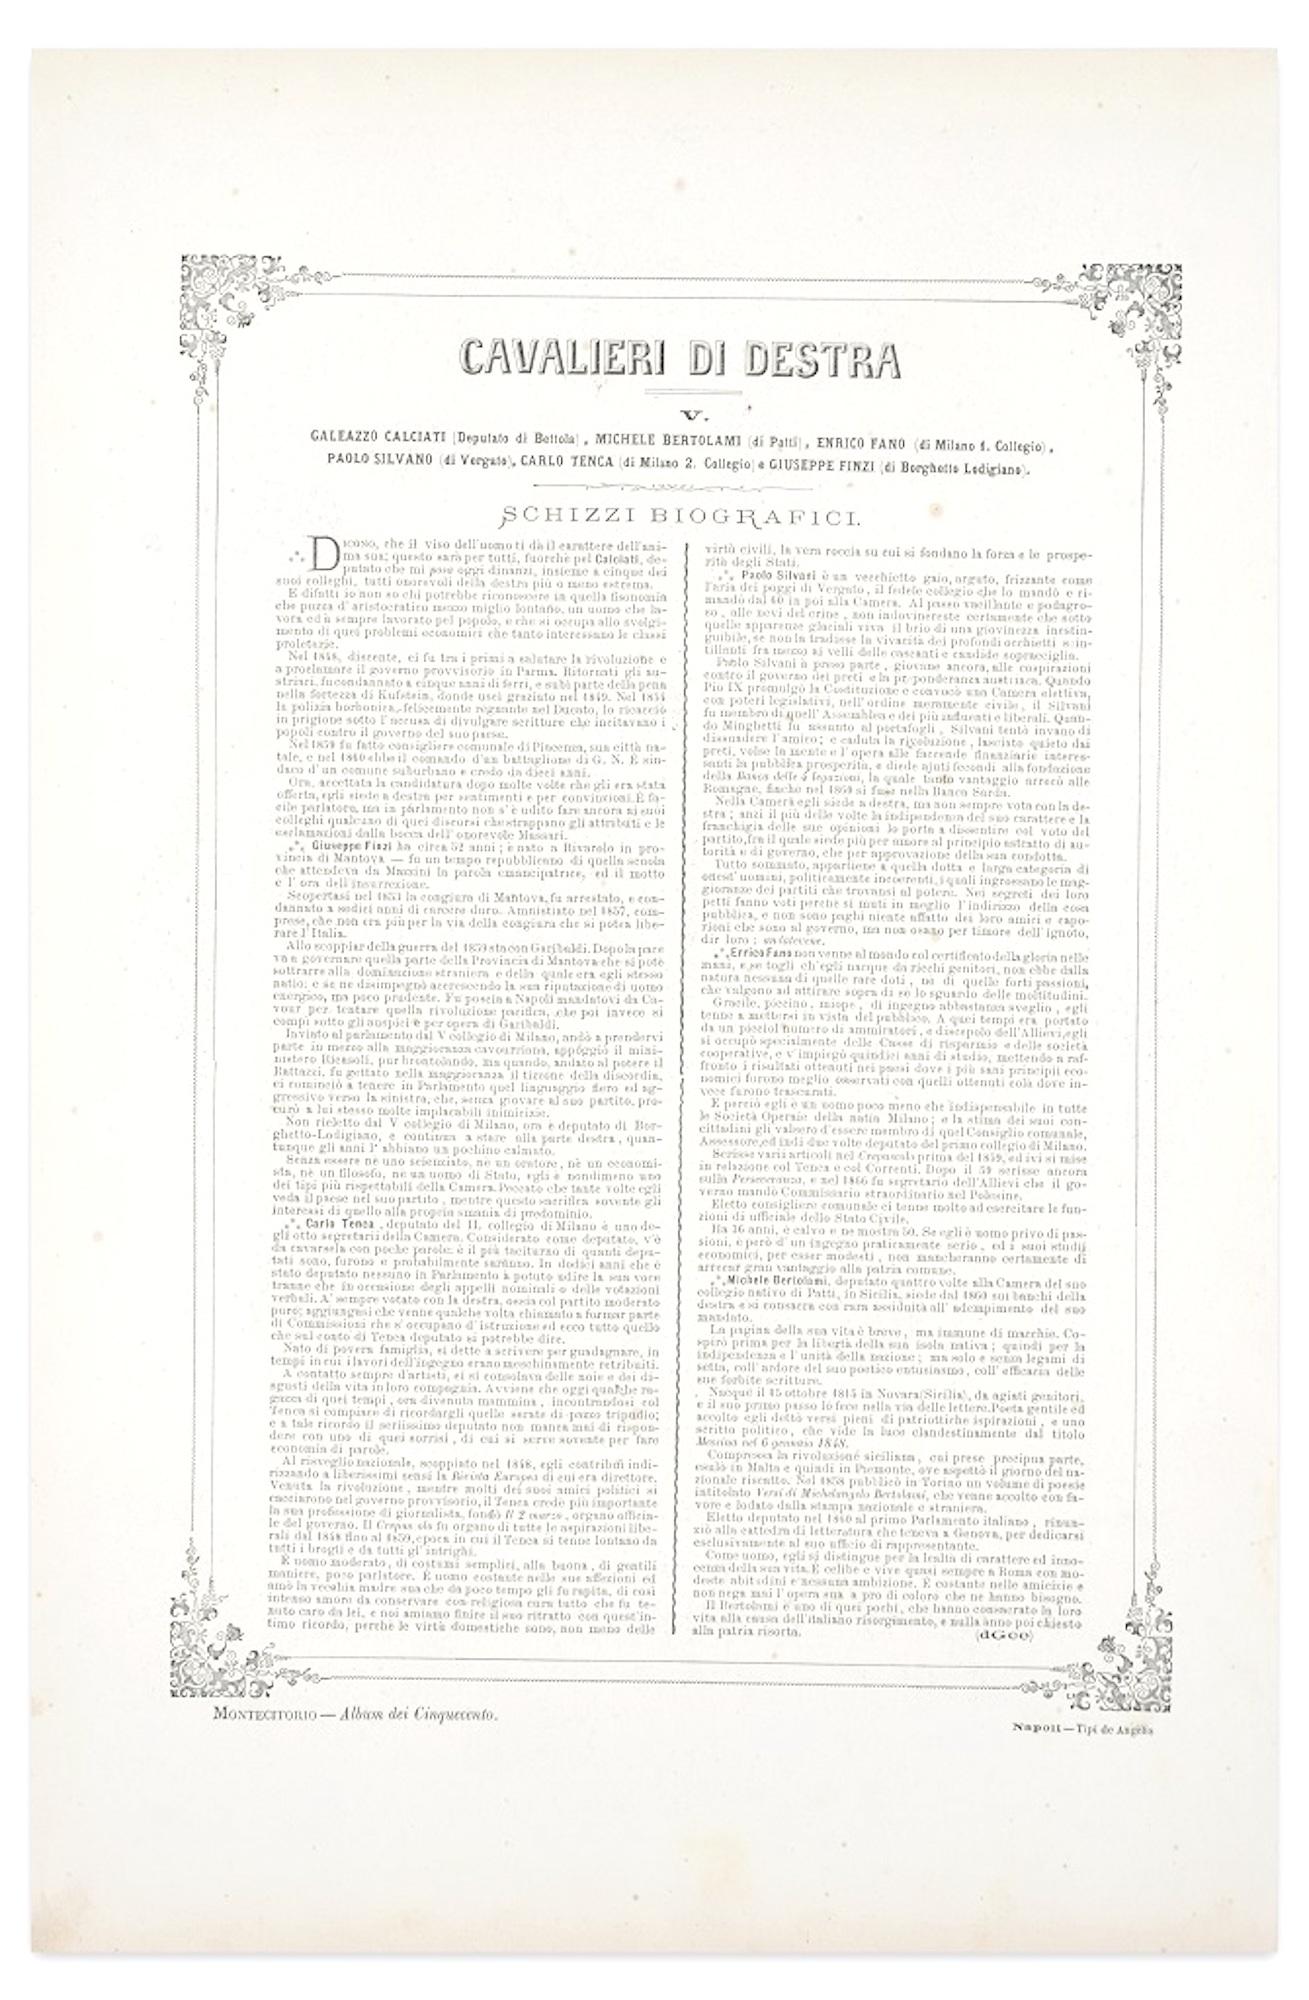 Cavalieri di Destra - Lithograph by A. Maganaro - 1870s - Print by Antonio Manganaro